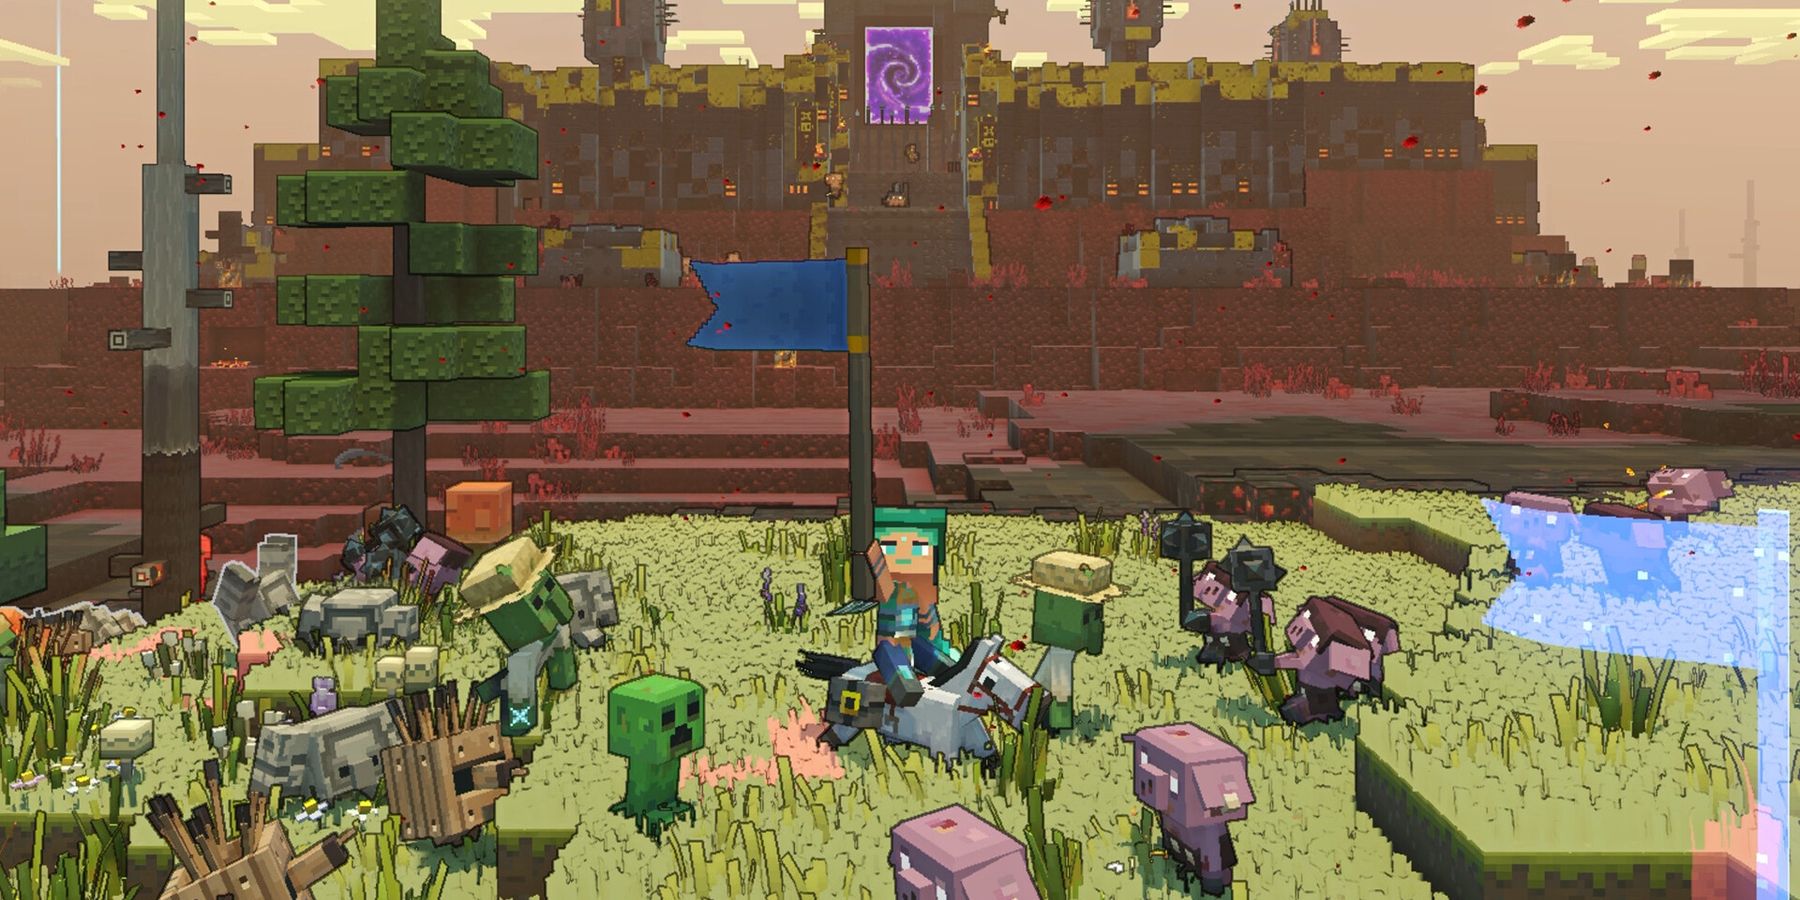 Minecraft Legends player gathering mobs to fight piglins.